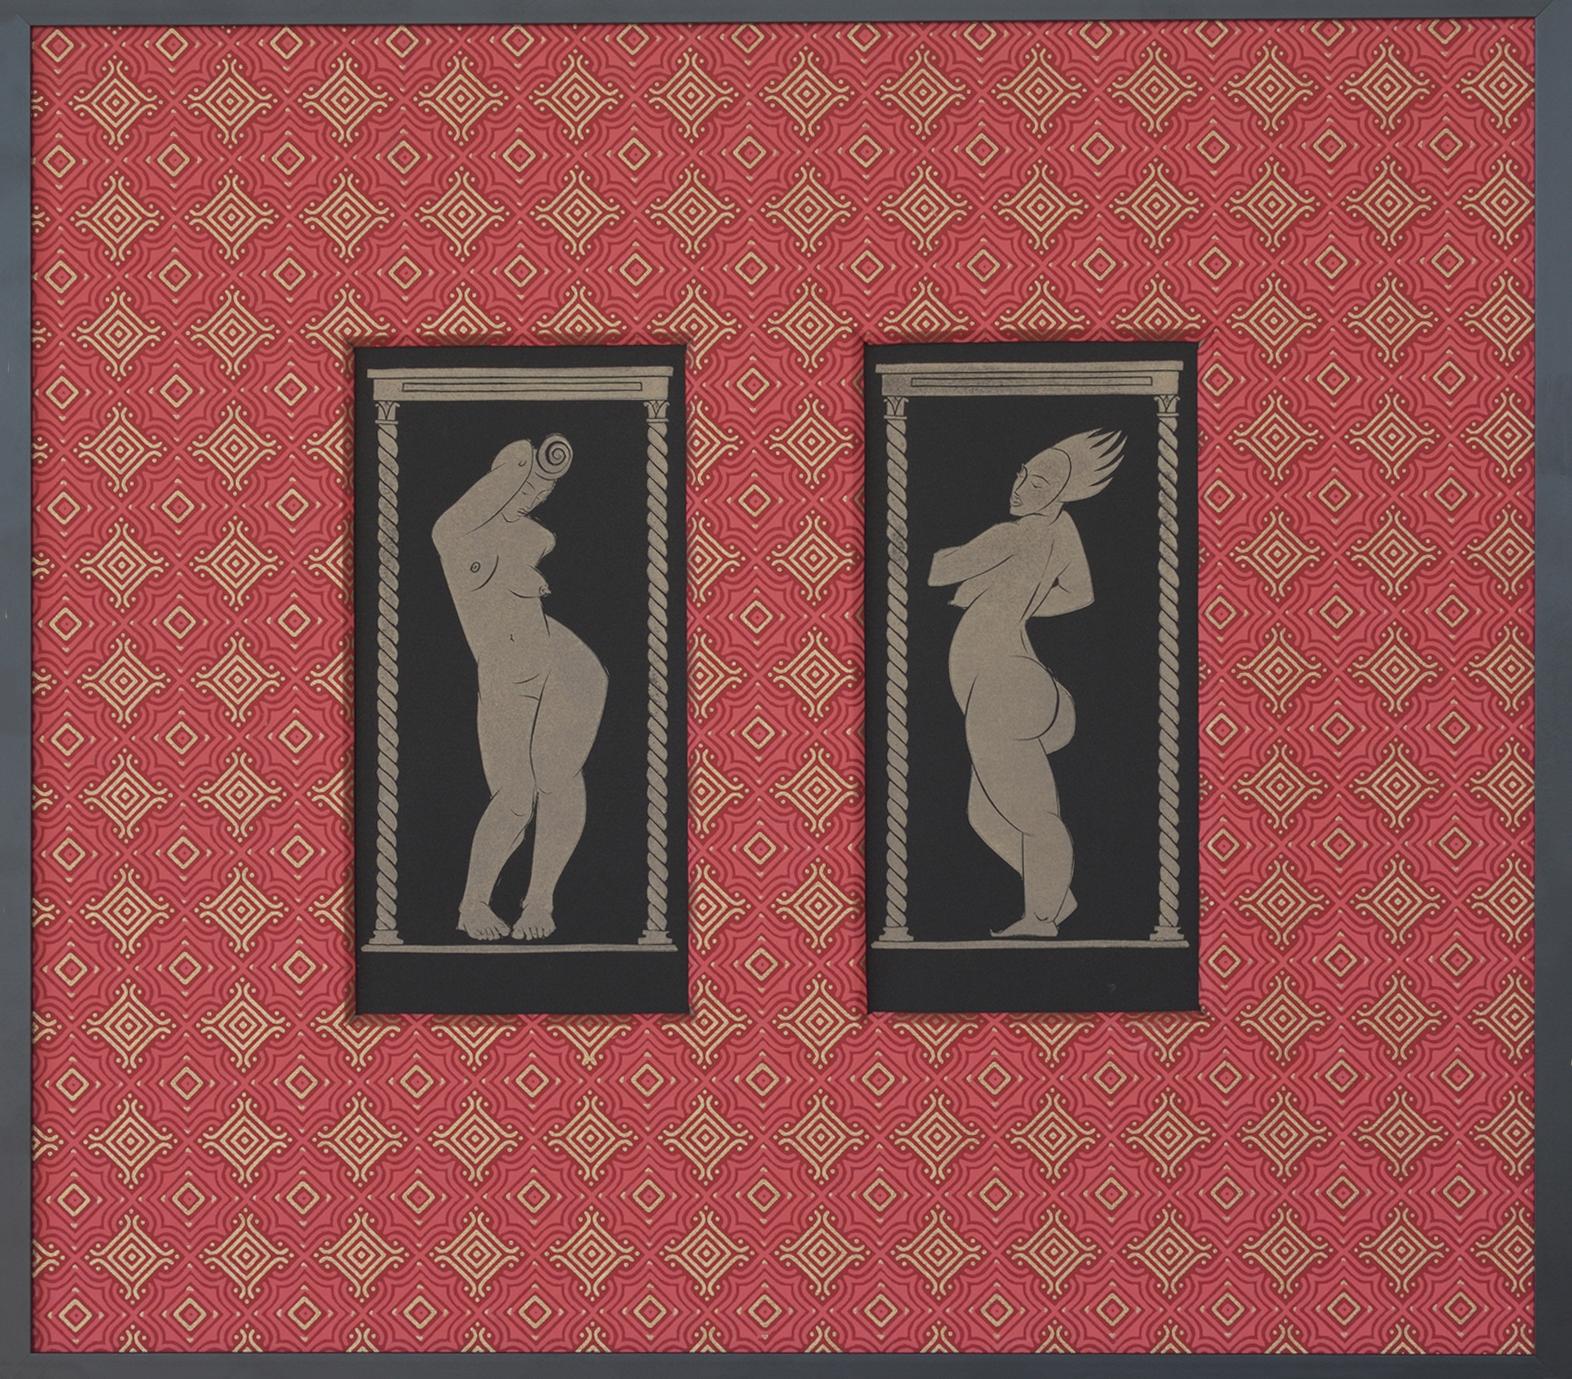 Martyn Tverdun Nude Print - "Equinox" - gold block print on black paper with red pattern mat